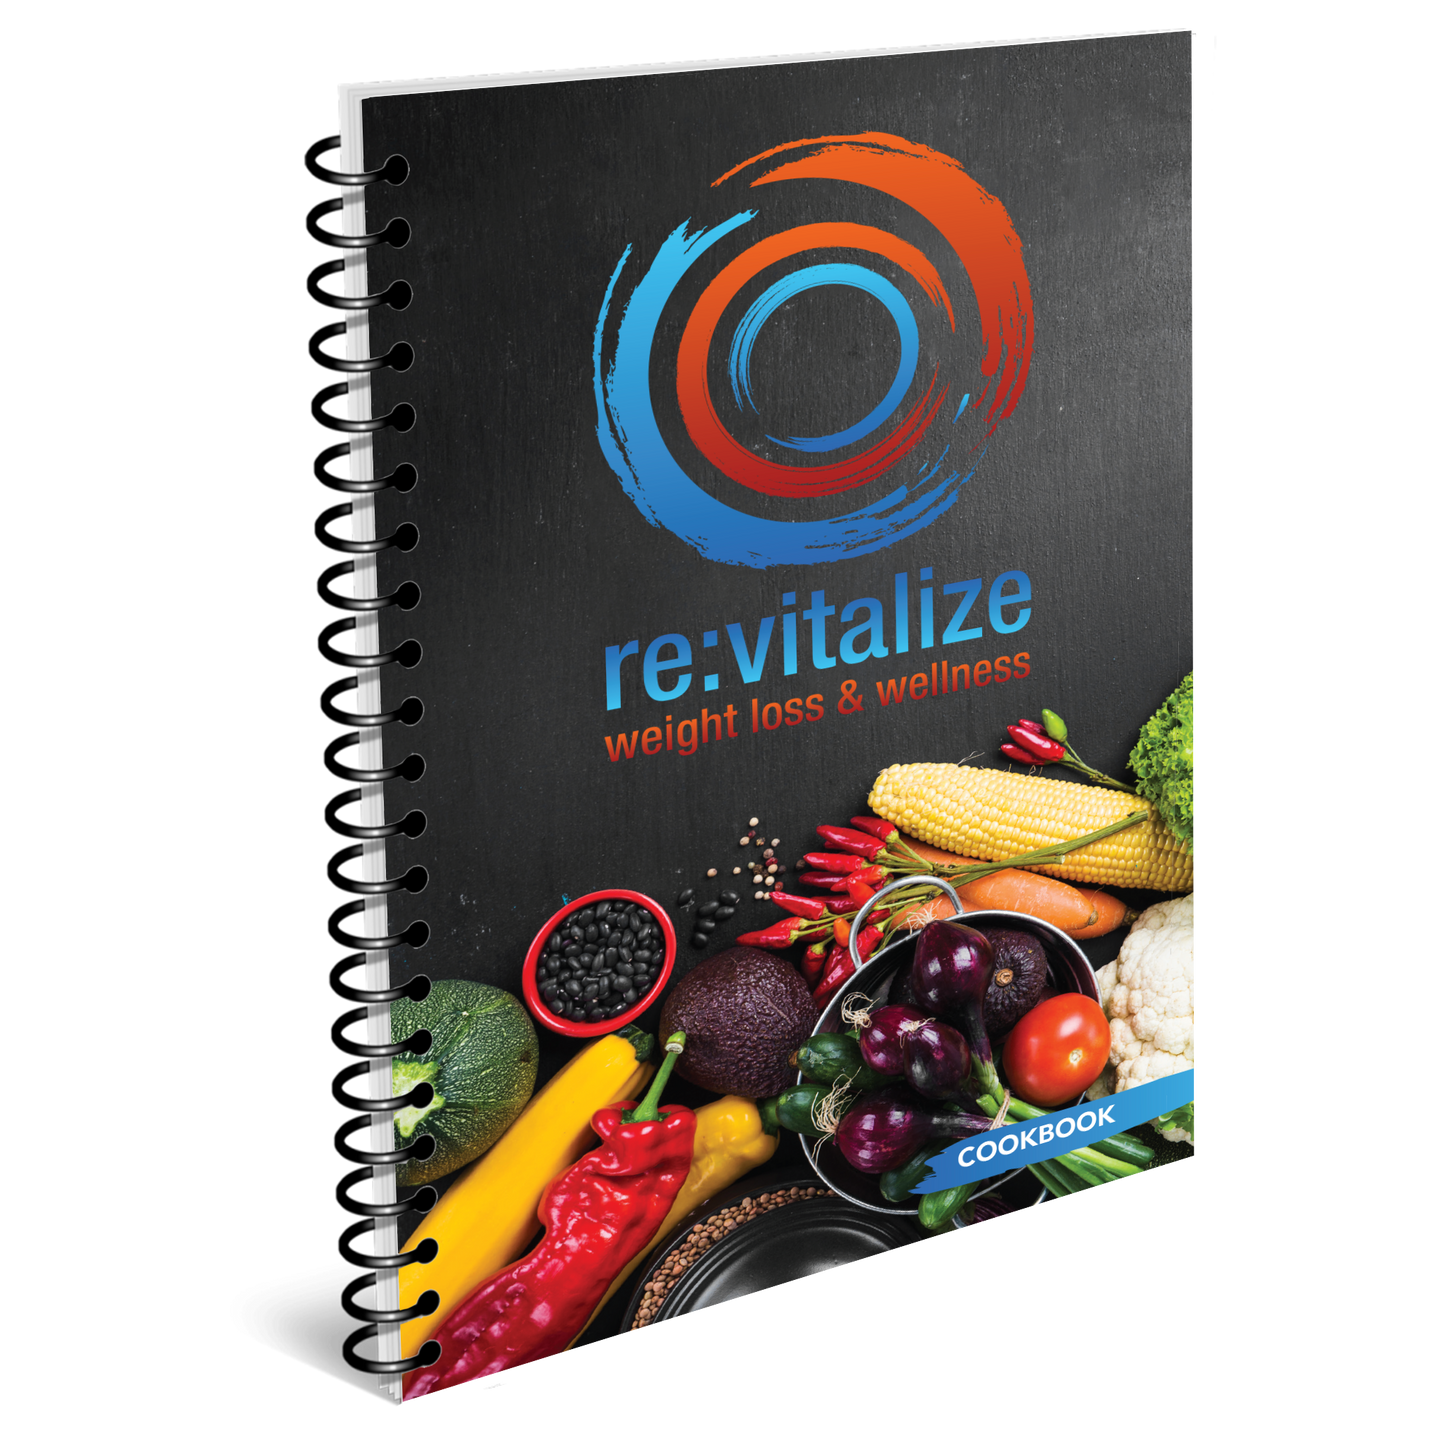 The Complete re:vitalize Cookbook